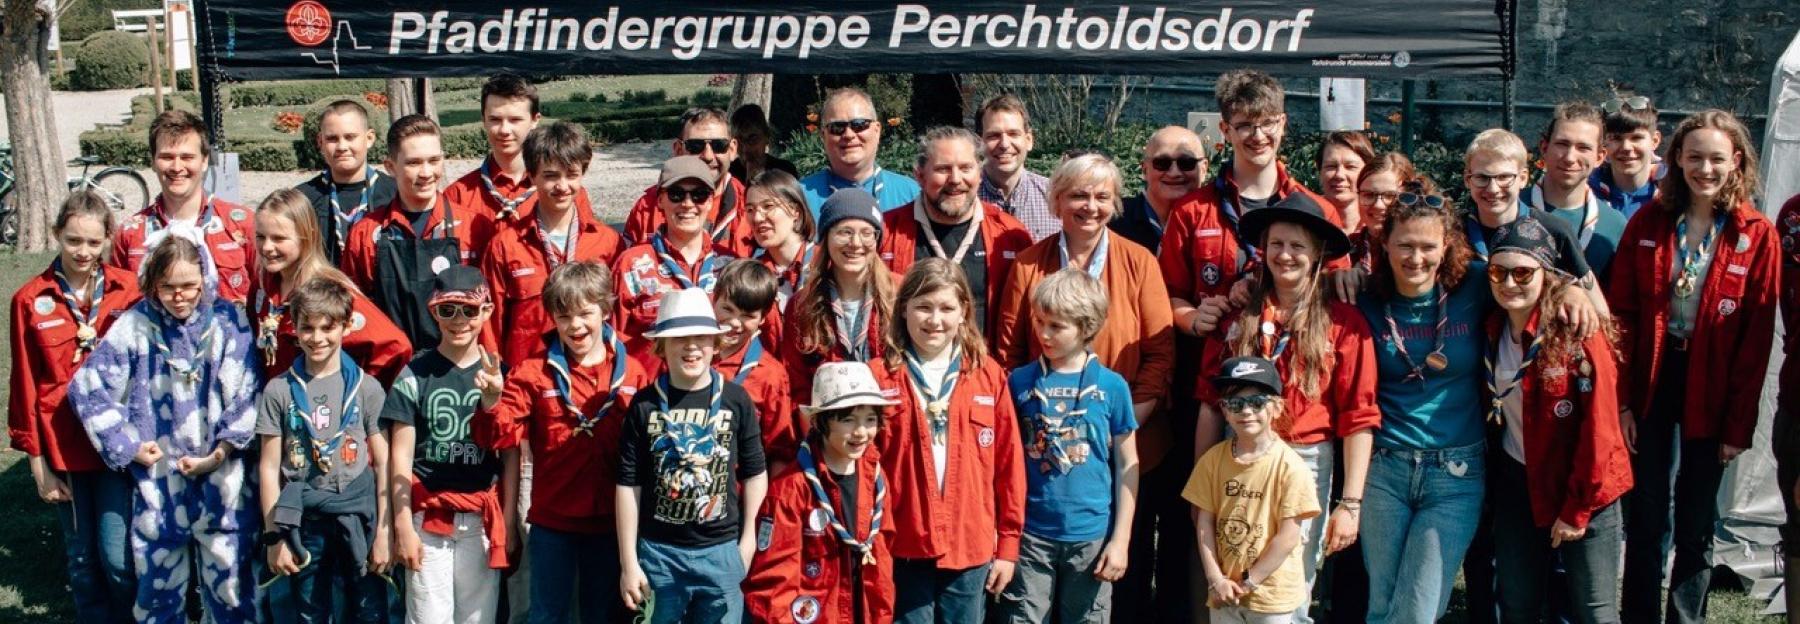 Pfadfindergruppe Perchtoldsdorf